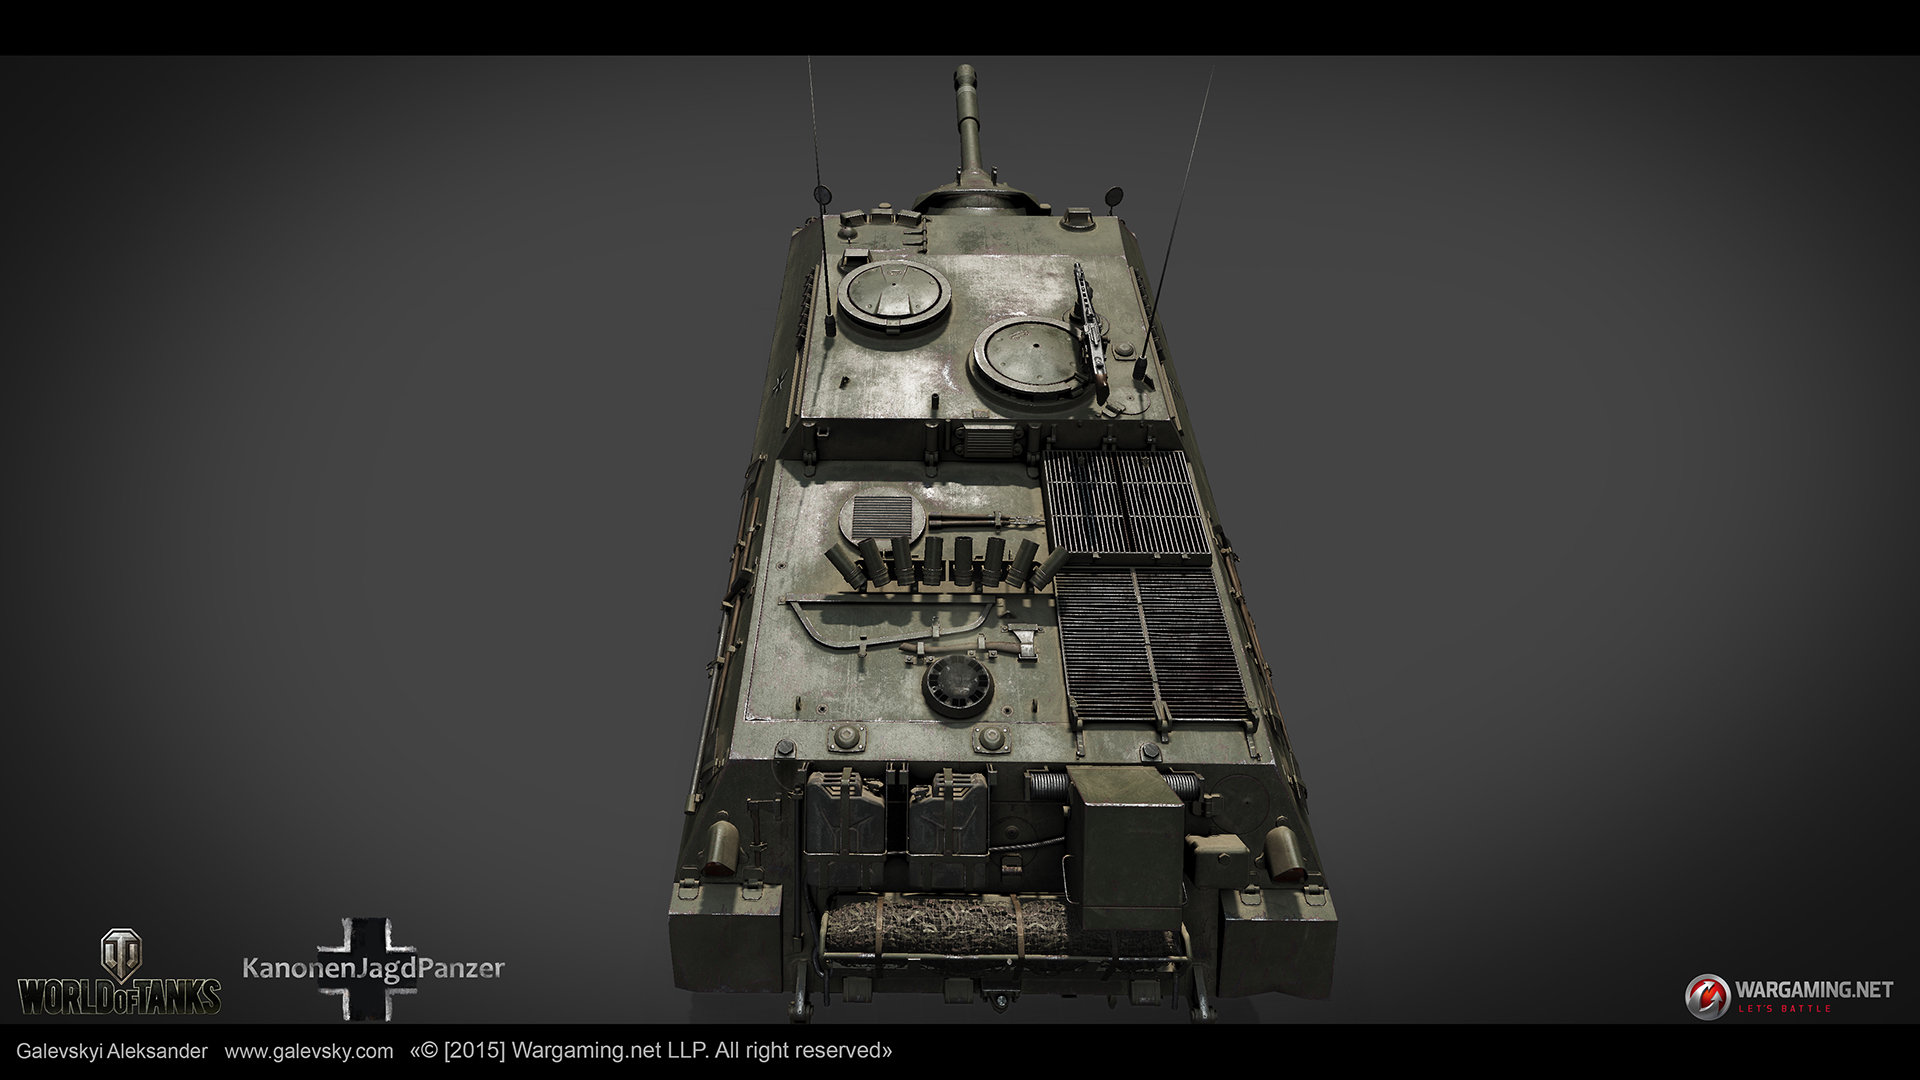 aleksander-galevskyi-kanonenjagdpanzer-fin-small-08